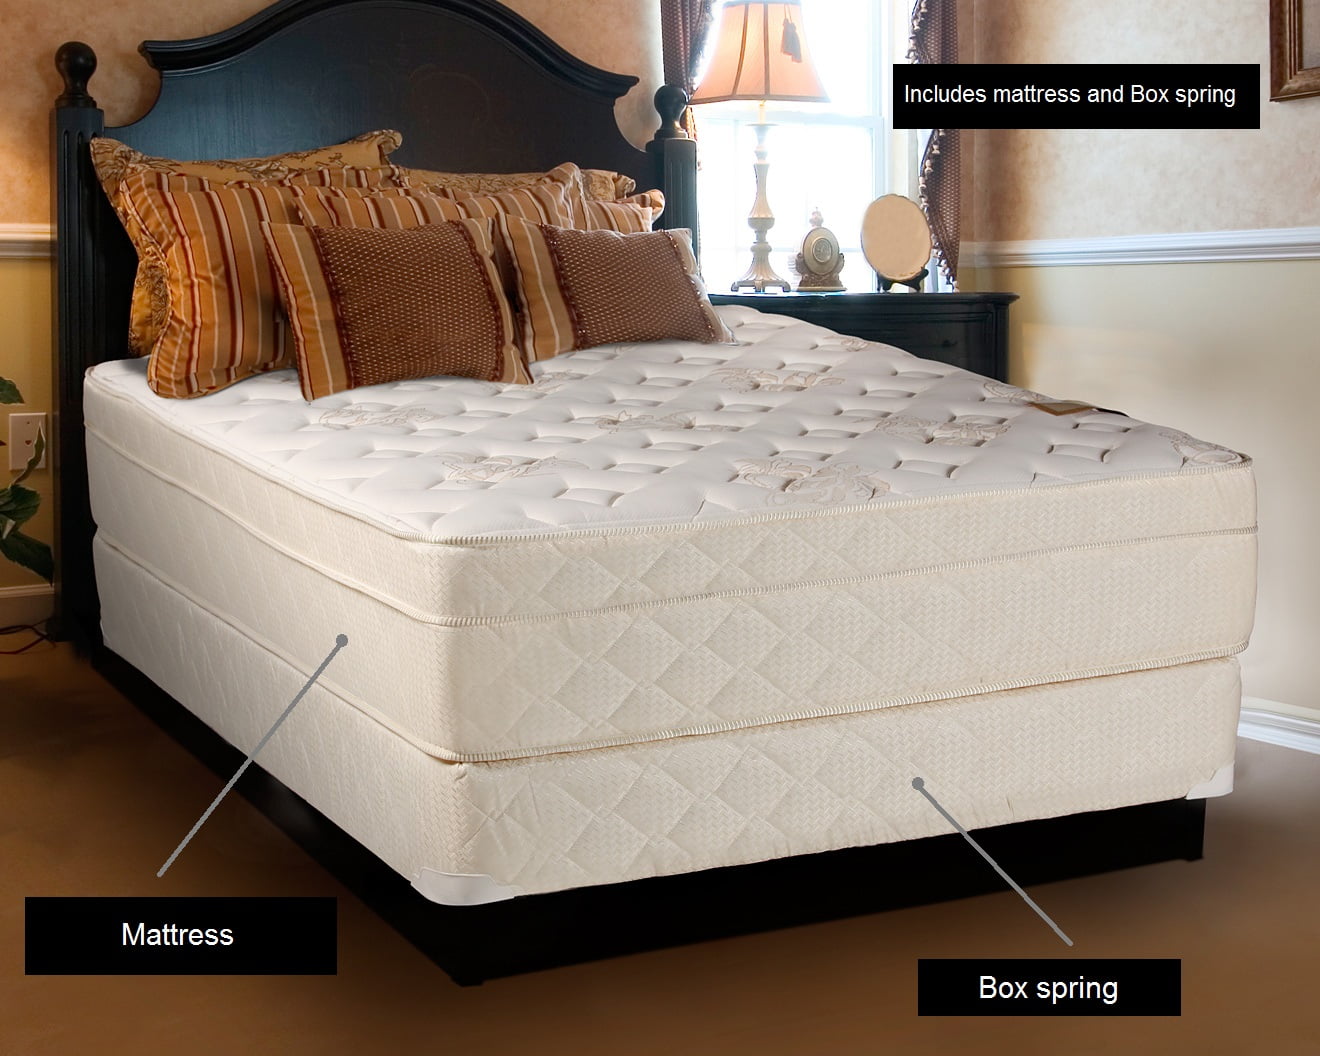 queen size mattress and box spring under 200